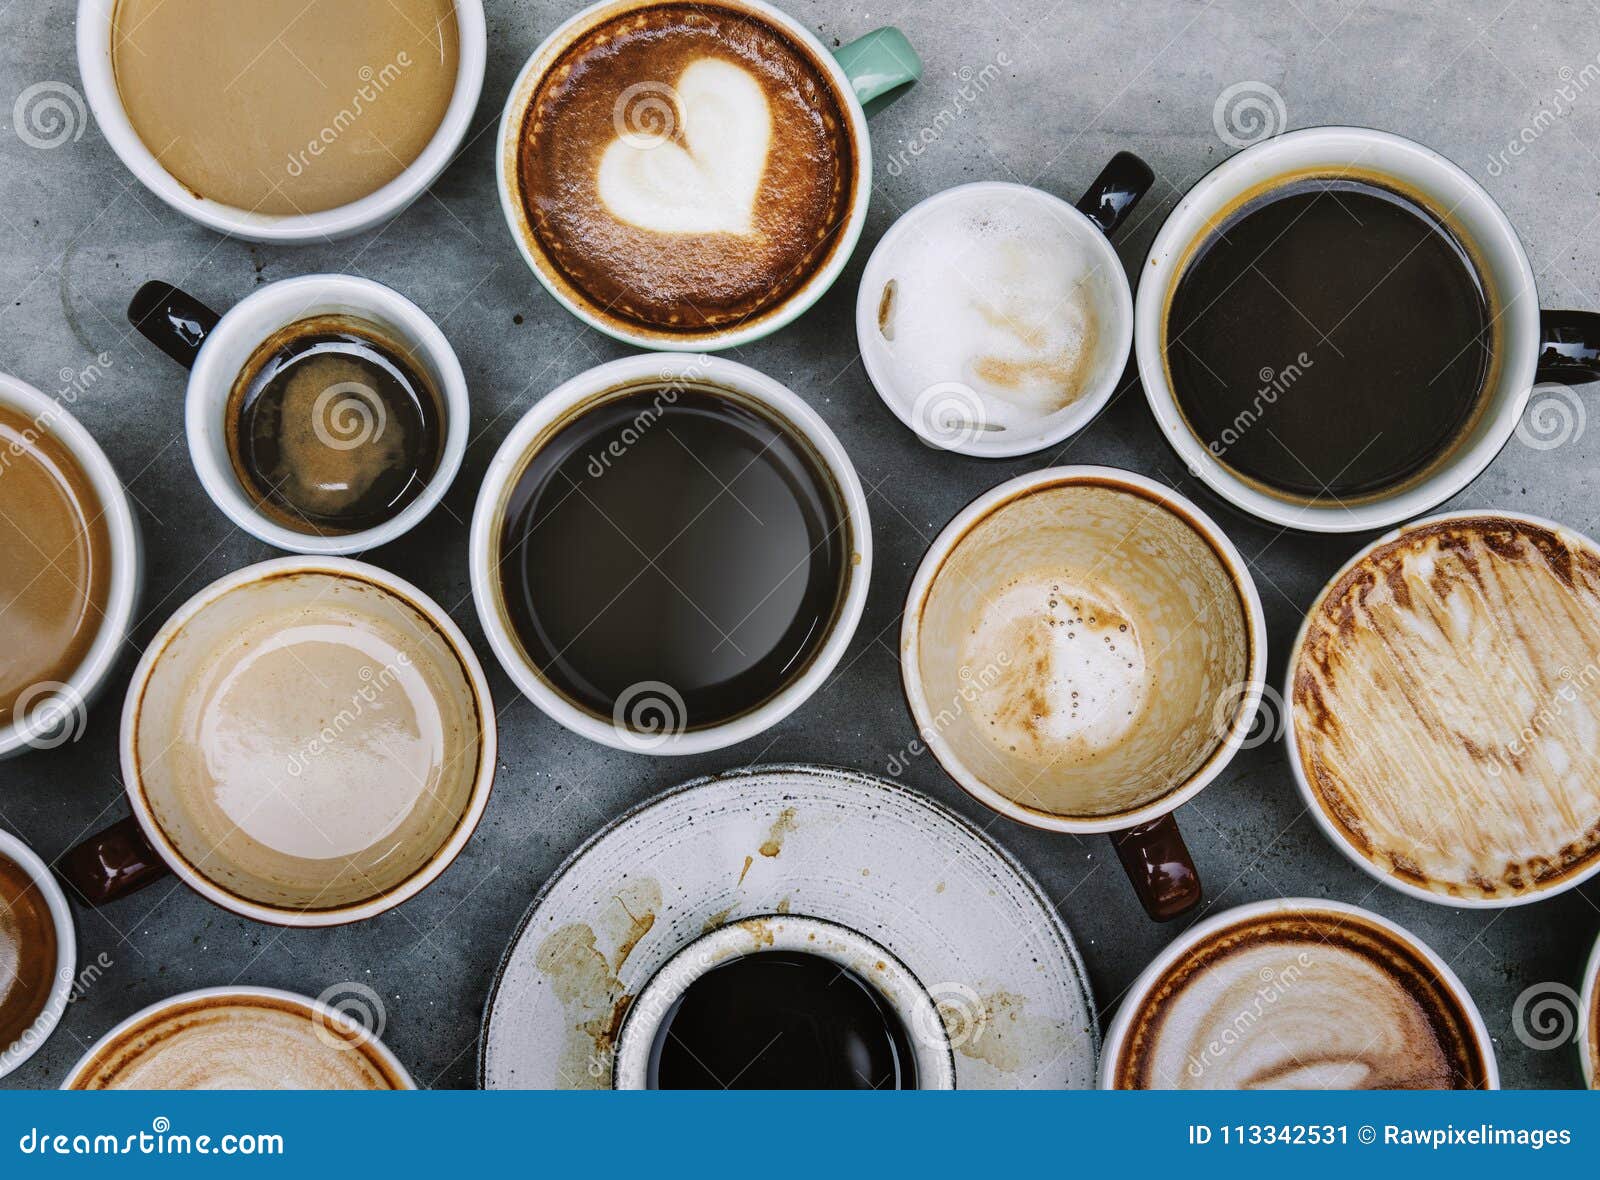 aerial view of various hot coffee drinks